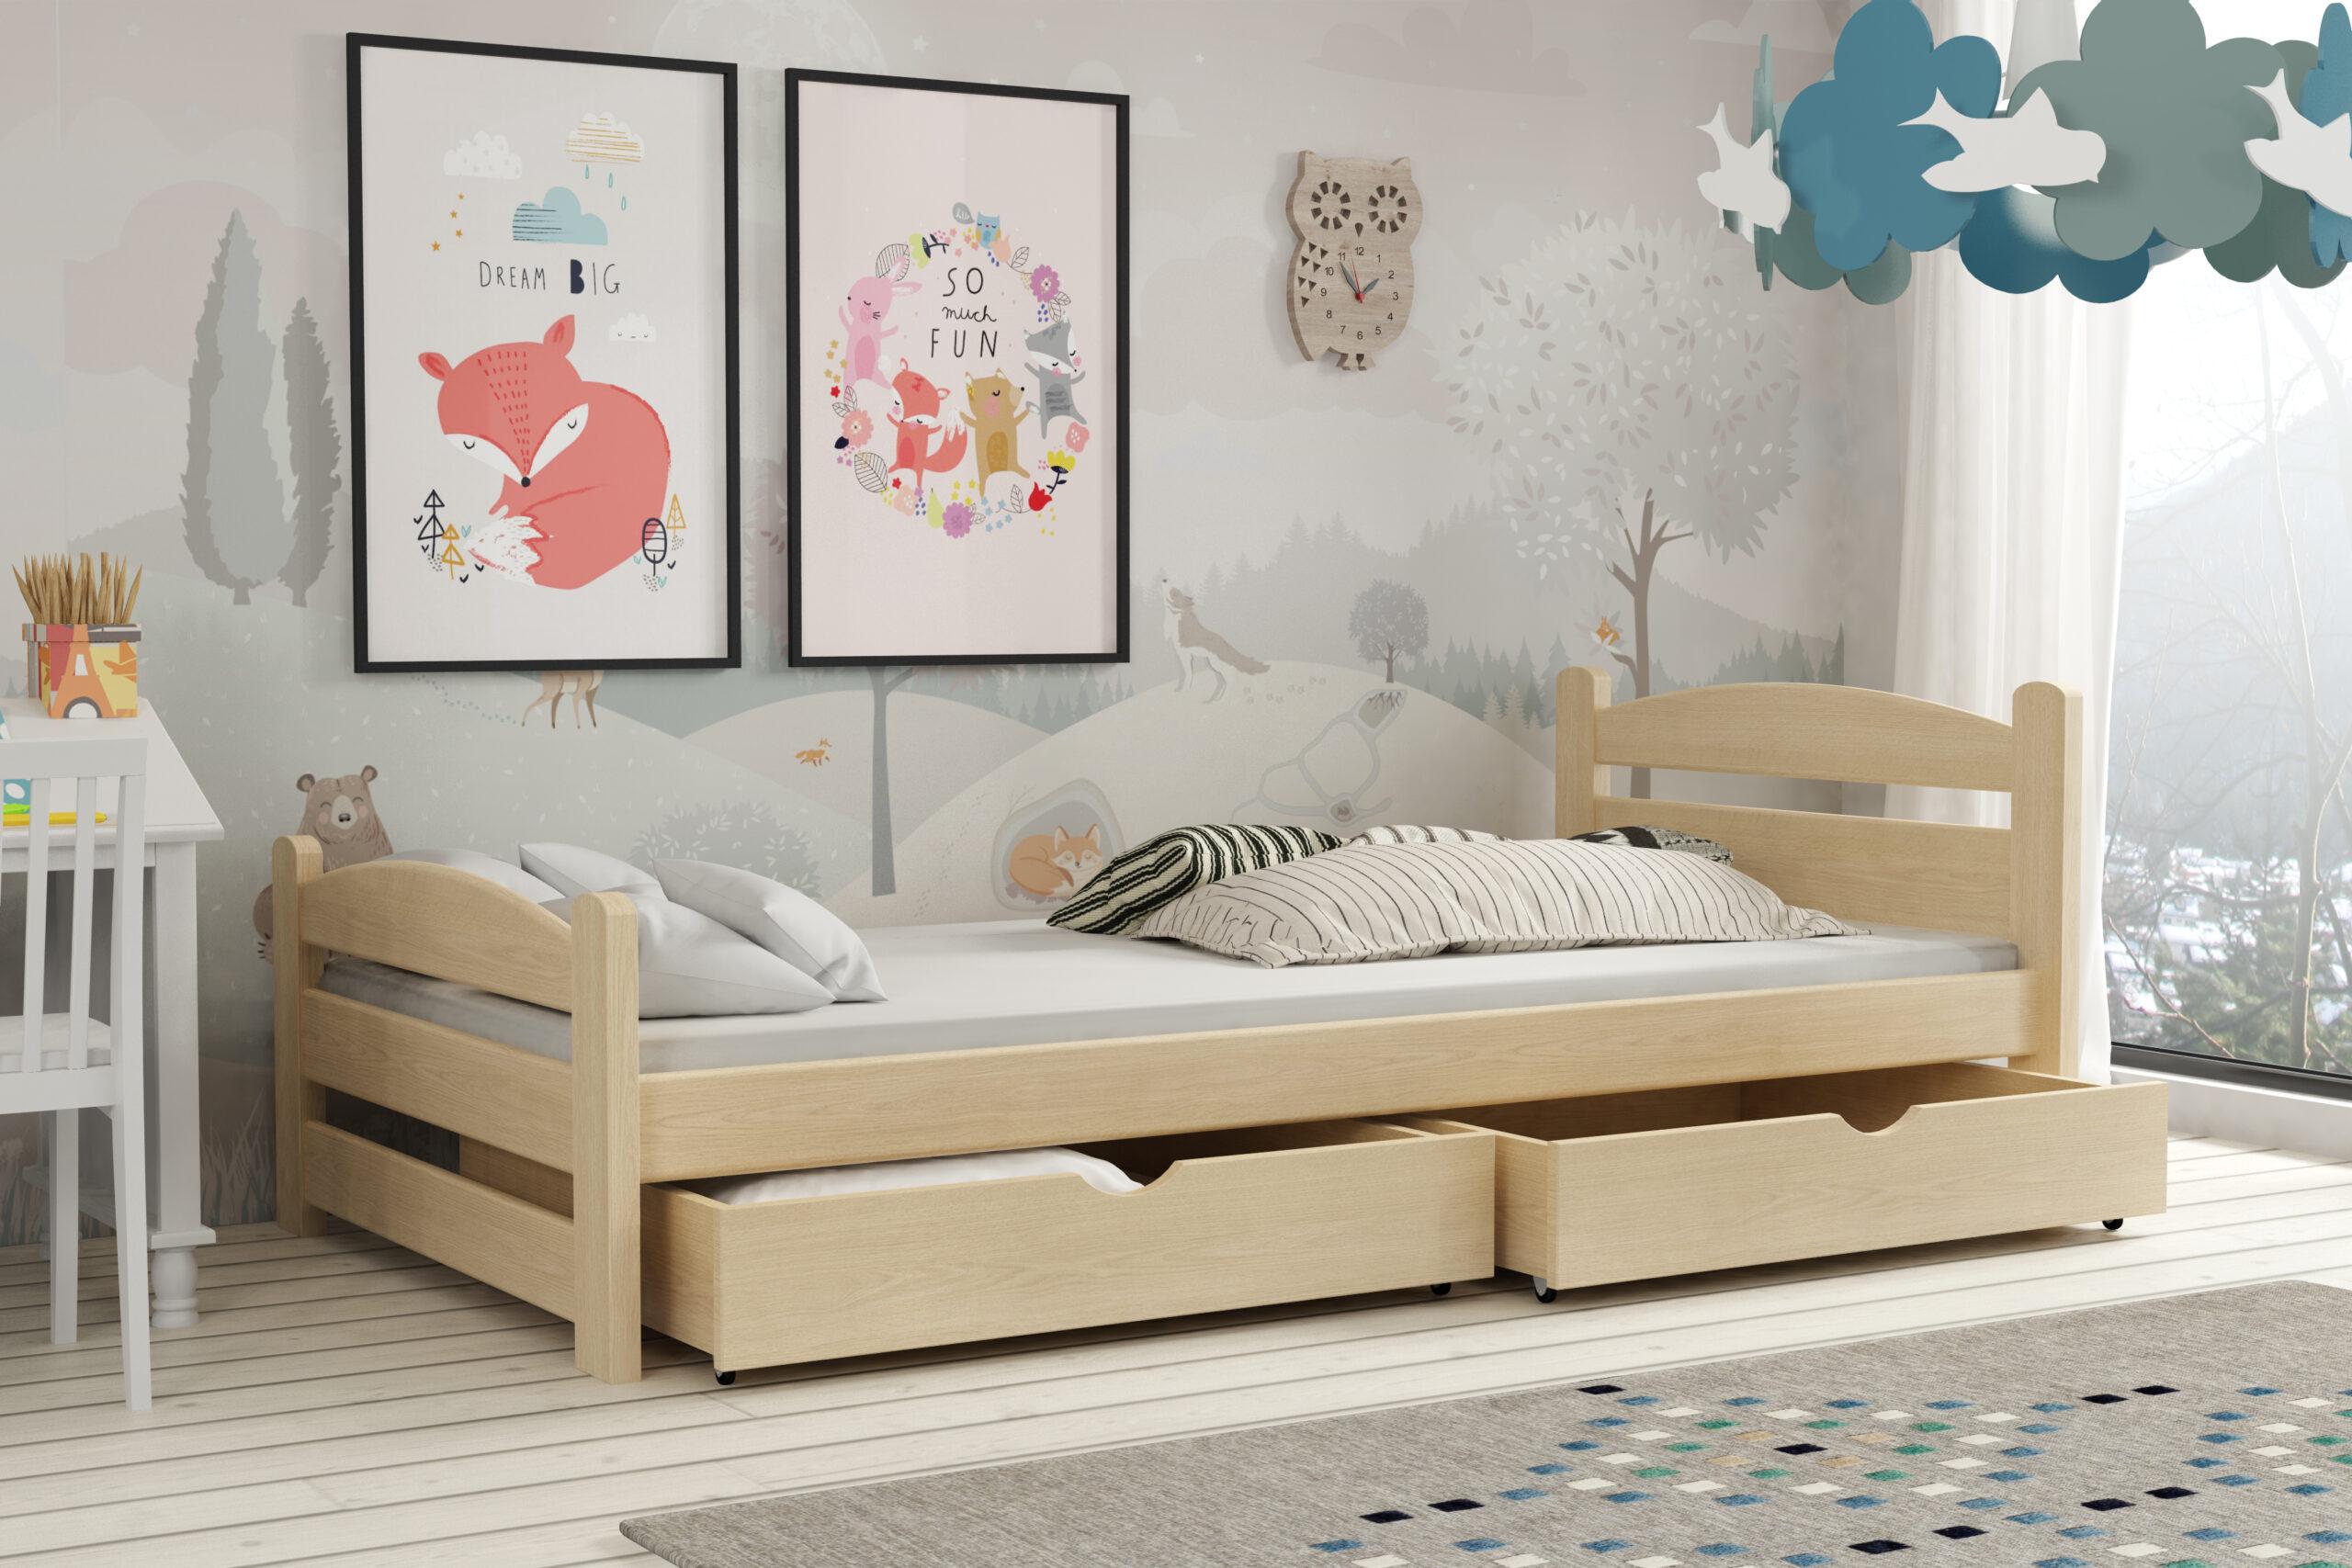 Dětská postel MAXÍK KIDBED ONE ze dřeva + rošt Barva: růžová, Rozměr: 80 x 200 cm, Zásuvky: ano